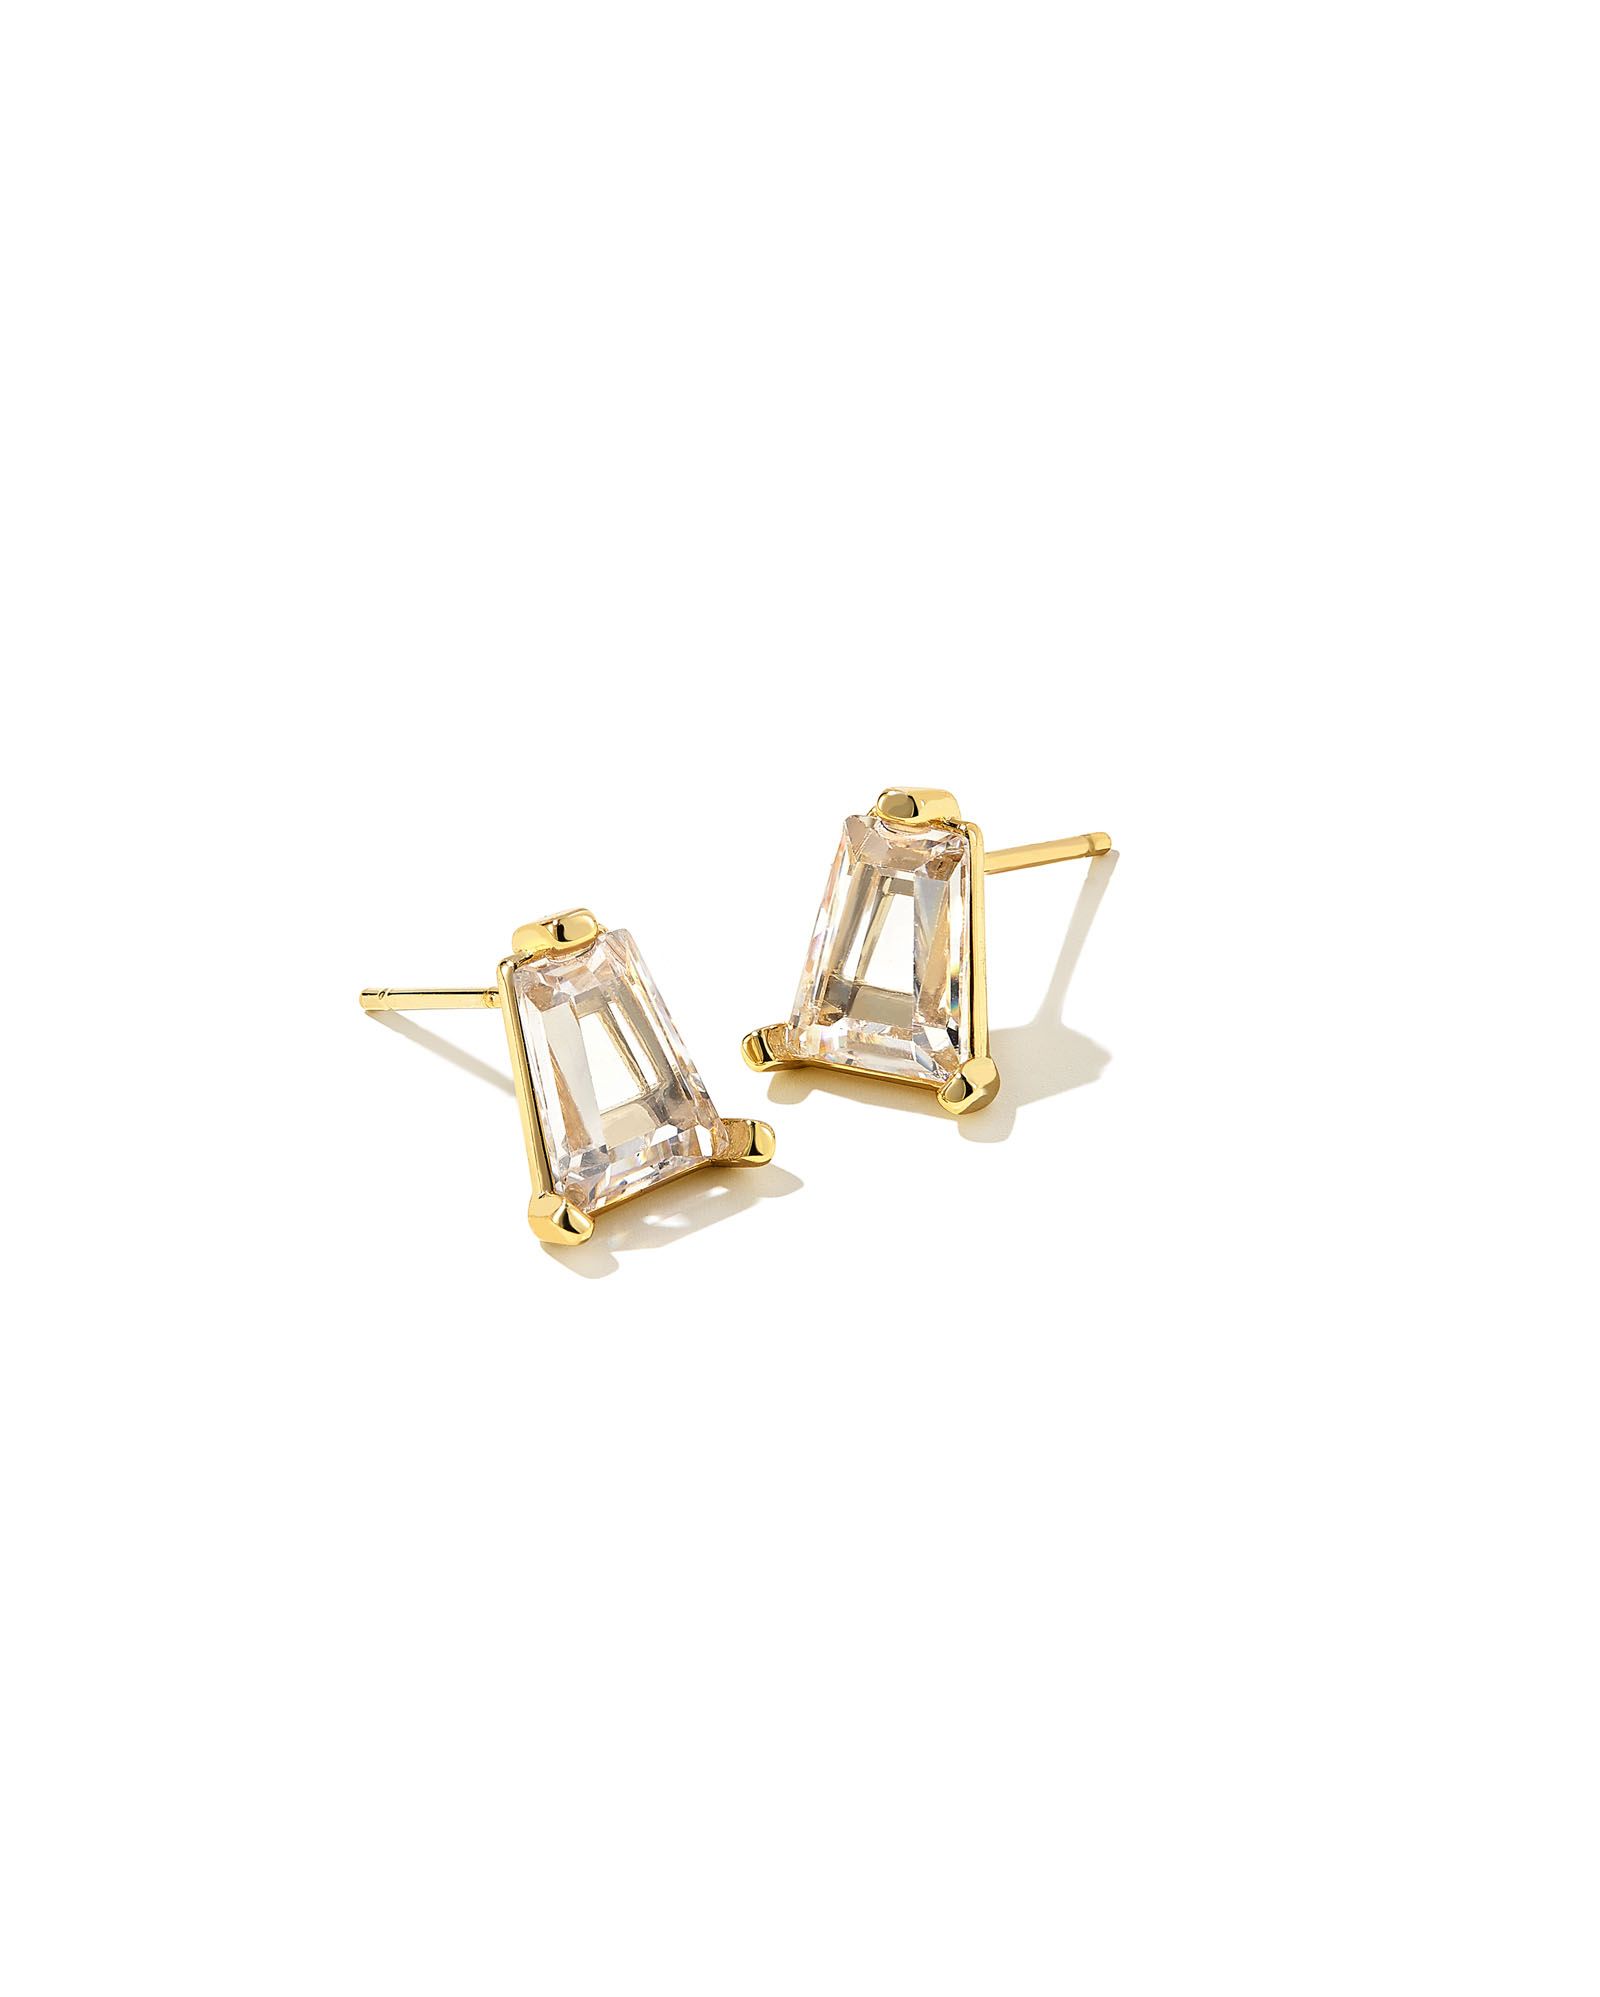 Blair Gold Stud Earrings in White Crystal | Kendra Scott | Kendra Scott